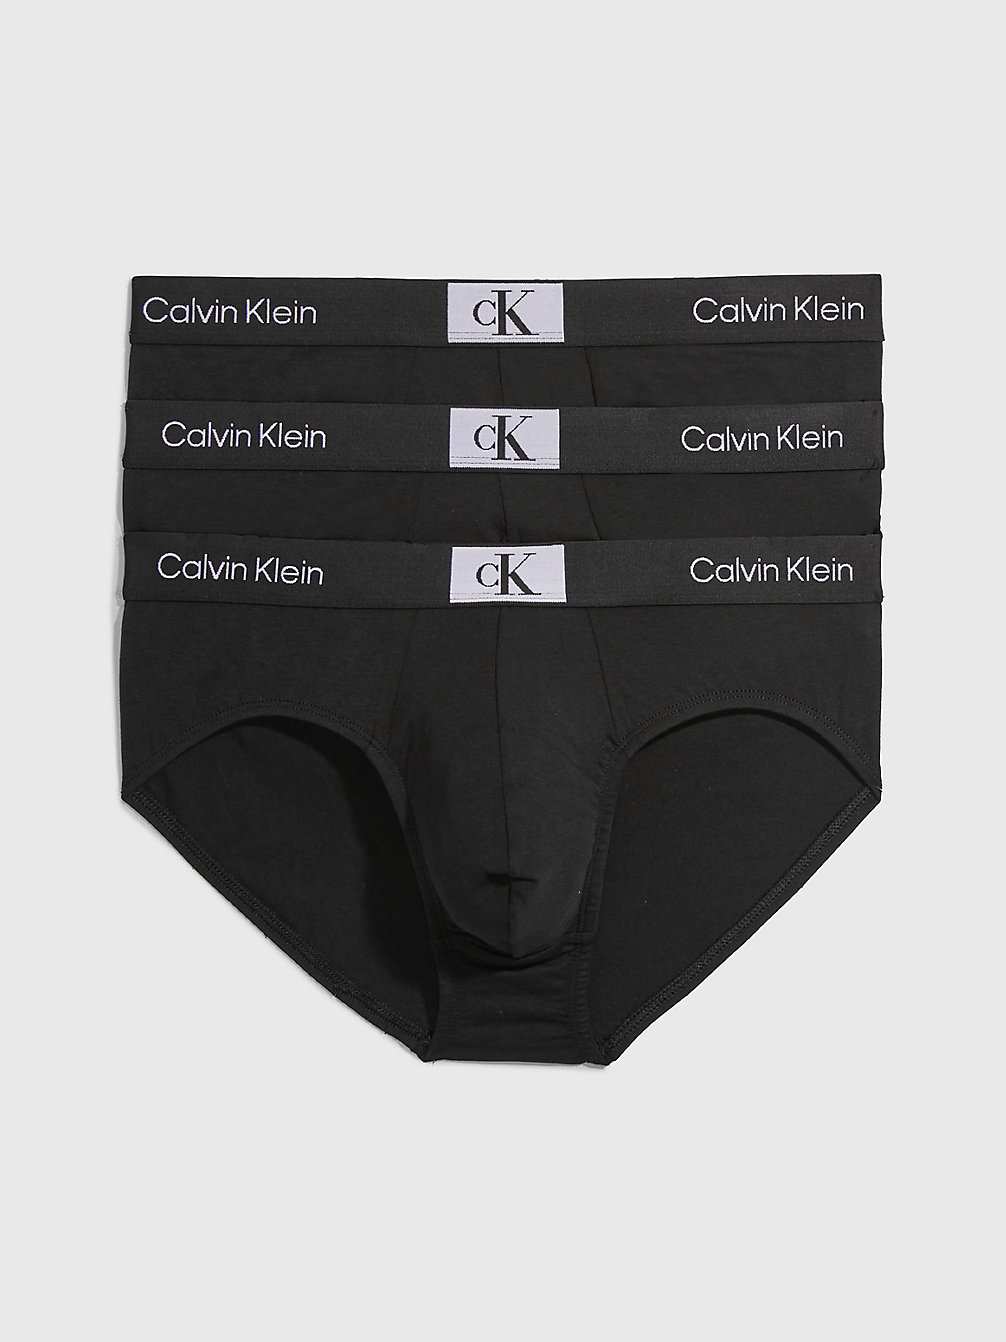 BLACK/ BLACK/ BLACK > Zestaw 3 Par Slipów - Ck96 > undefined Mężczyźni - Calvin Klein